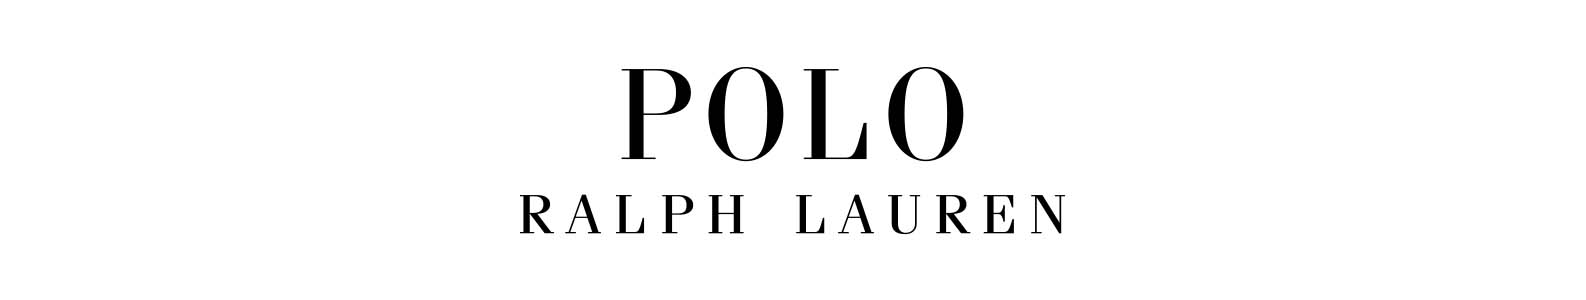 Polo Ralph Lauren brand header image